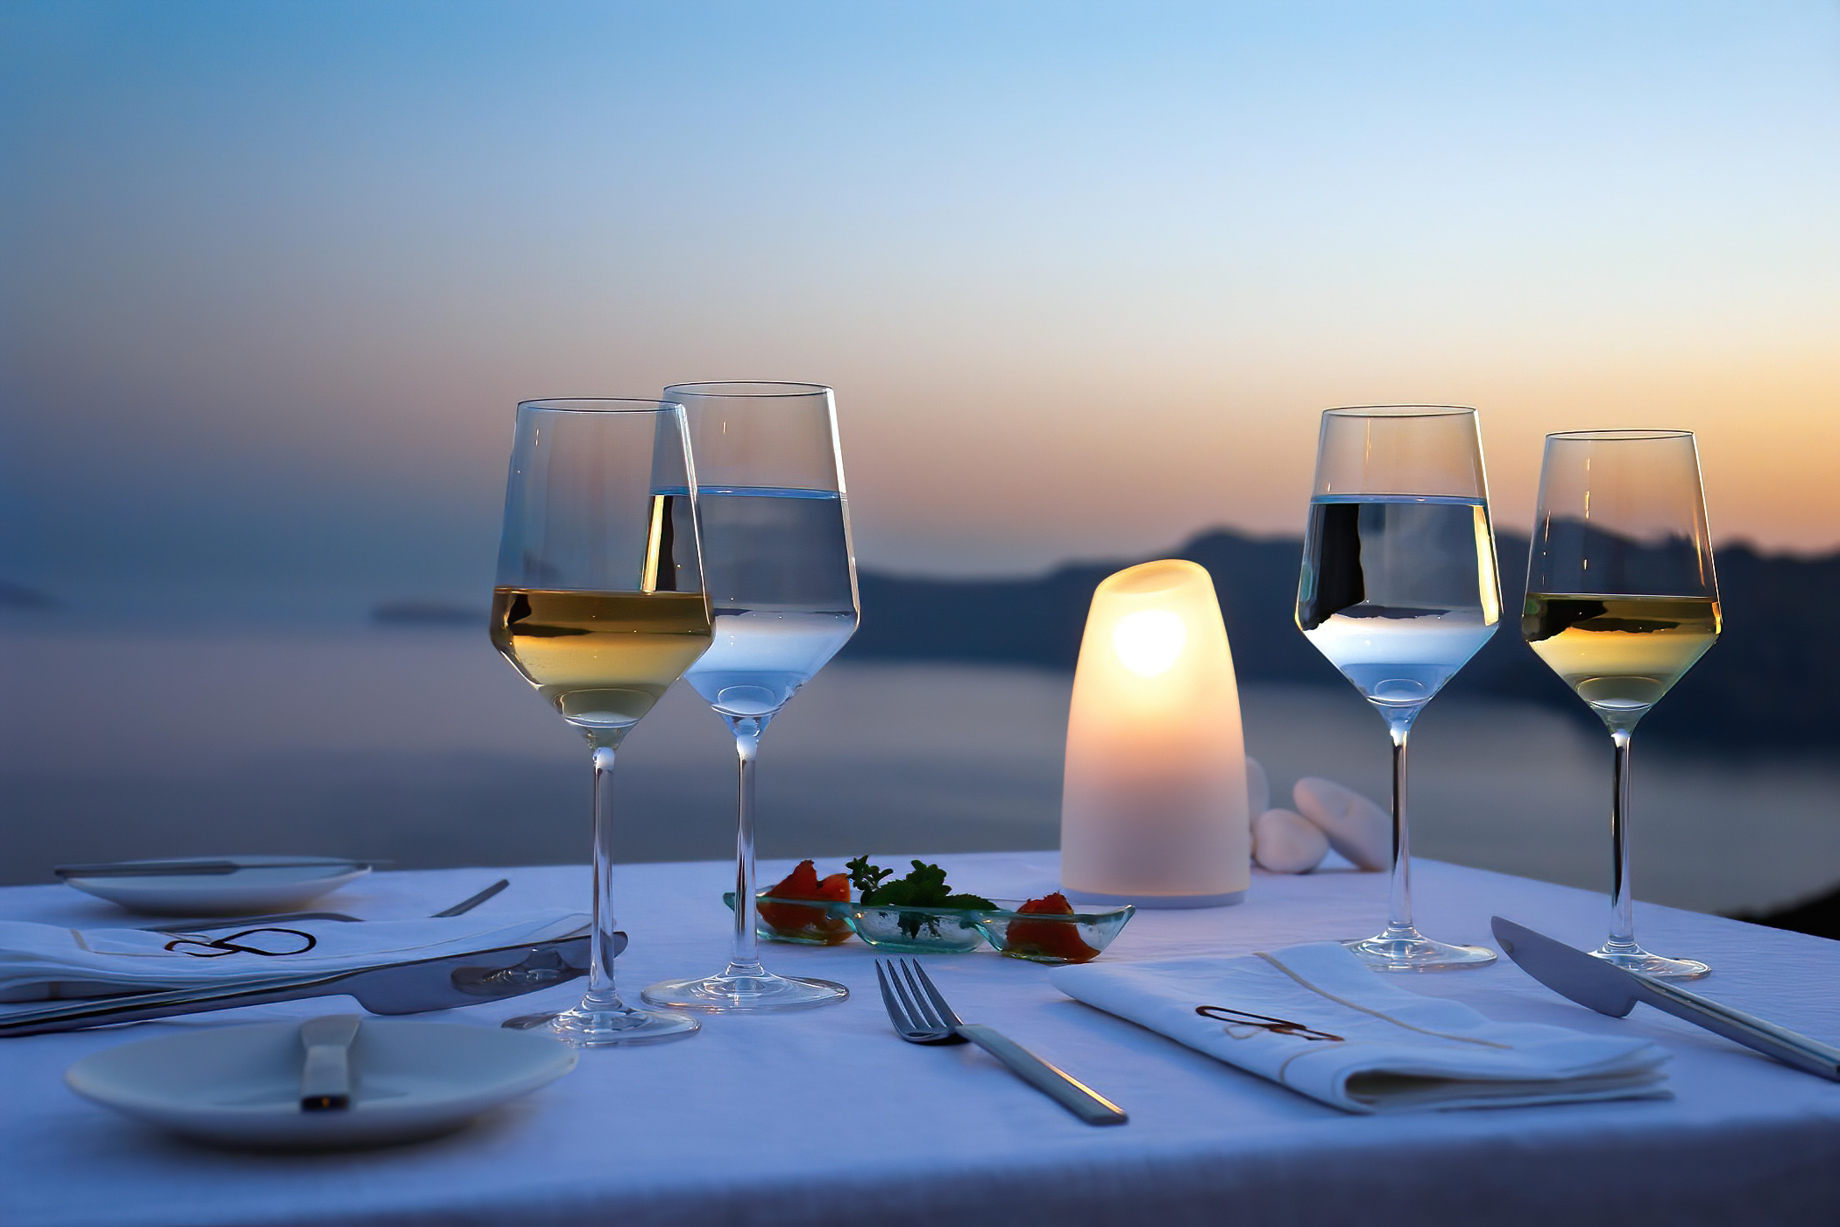 Mystique Hotel Santorini – Oia, Santorini Island, Greece – Dining Table Ocean View